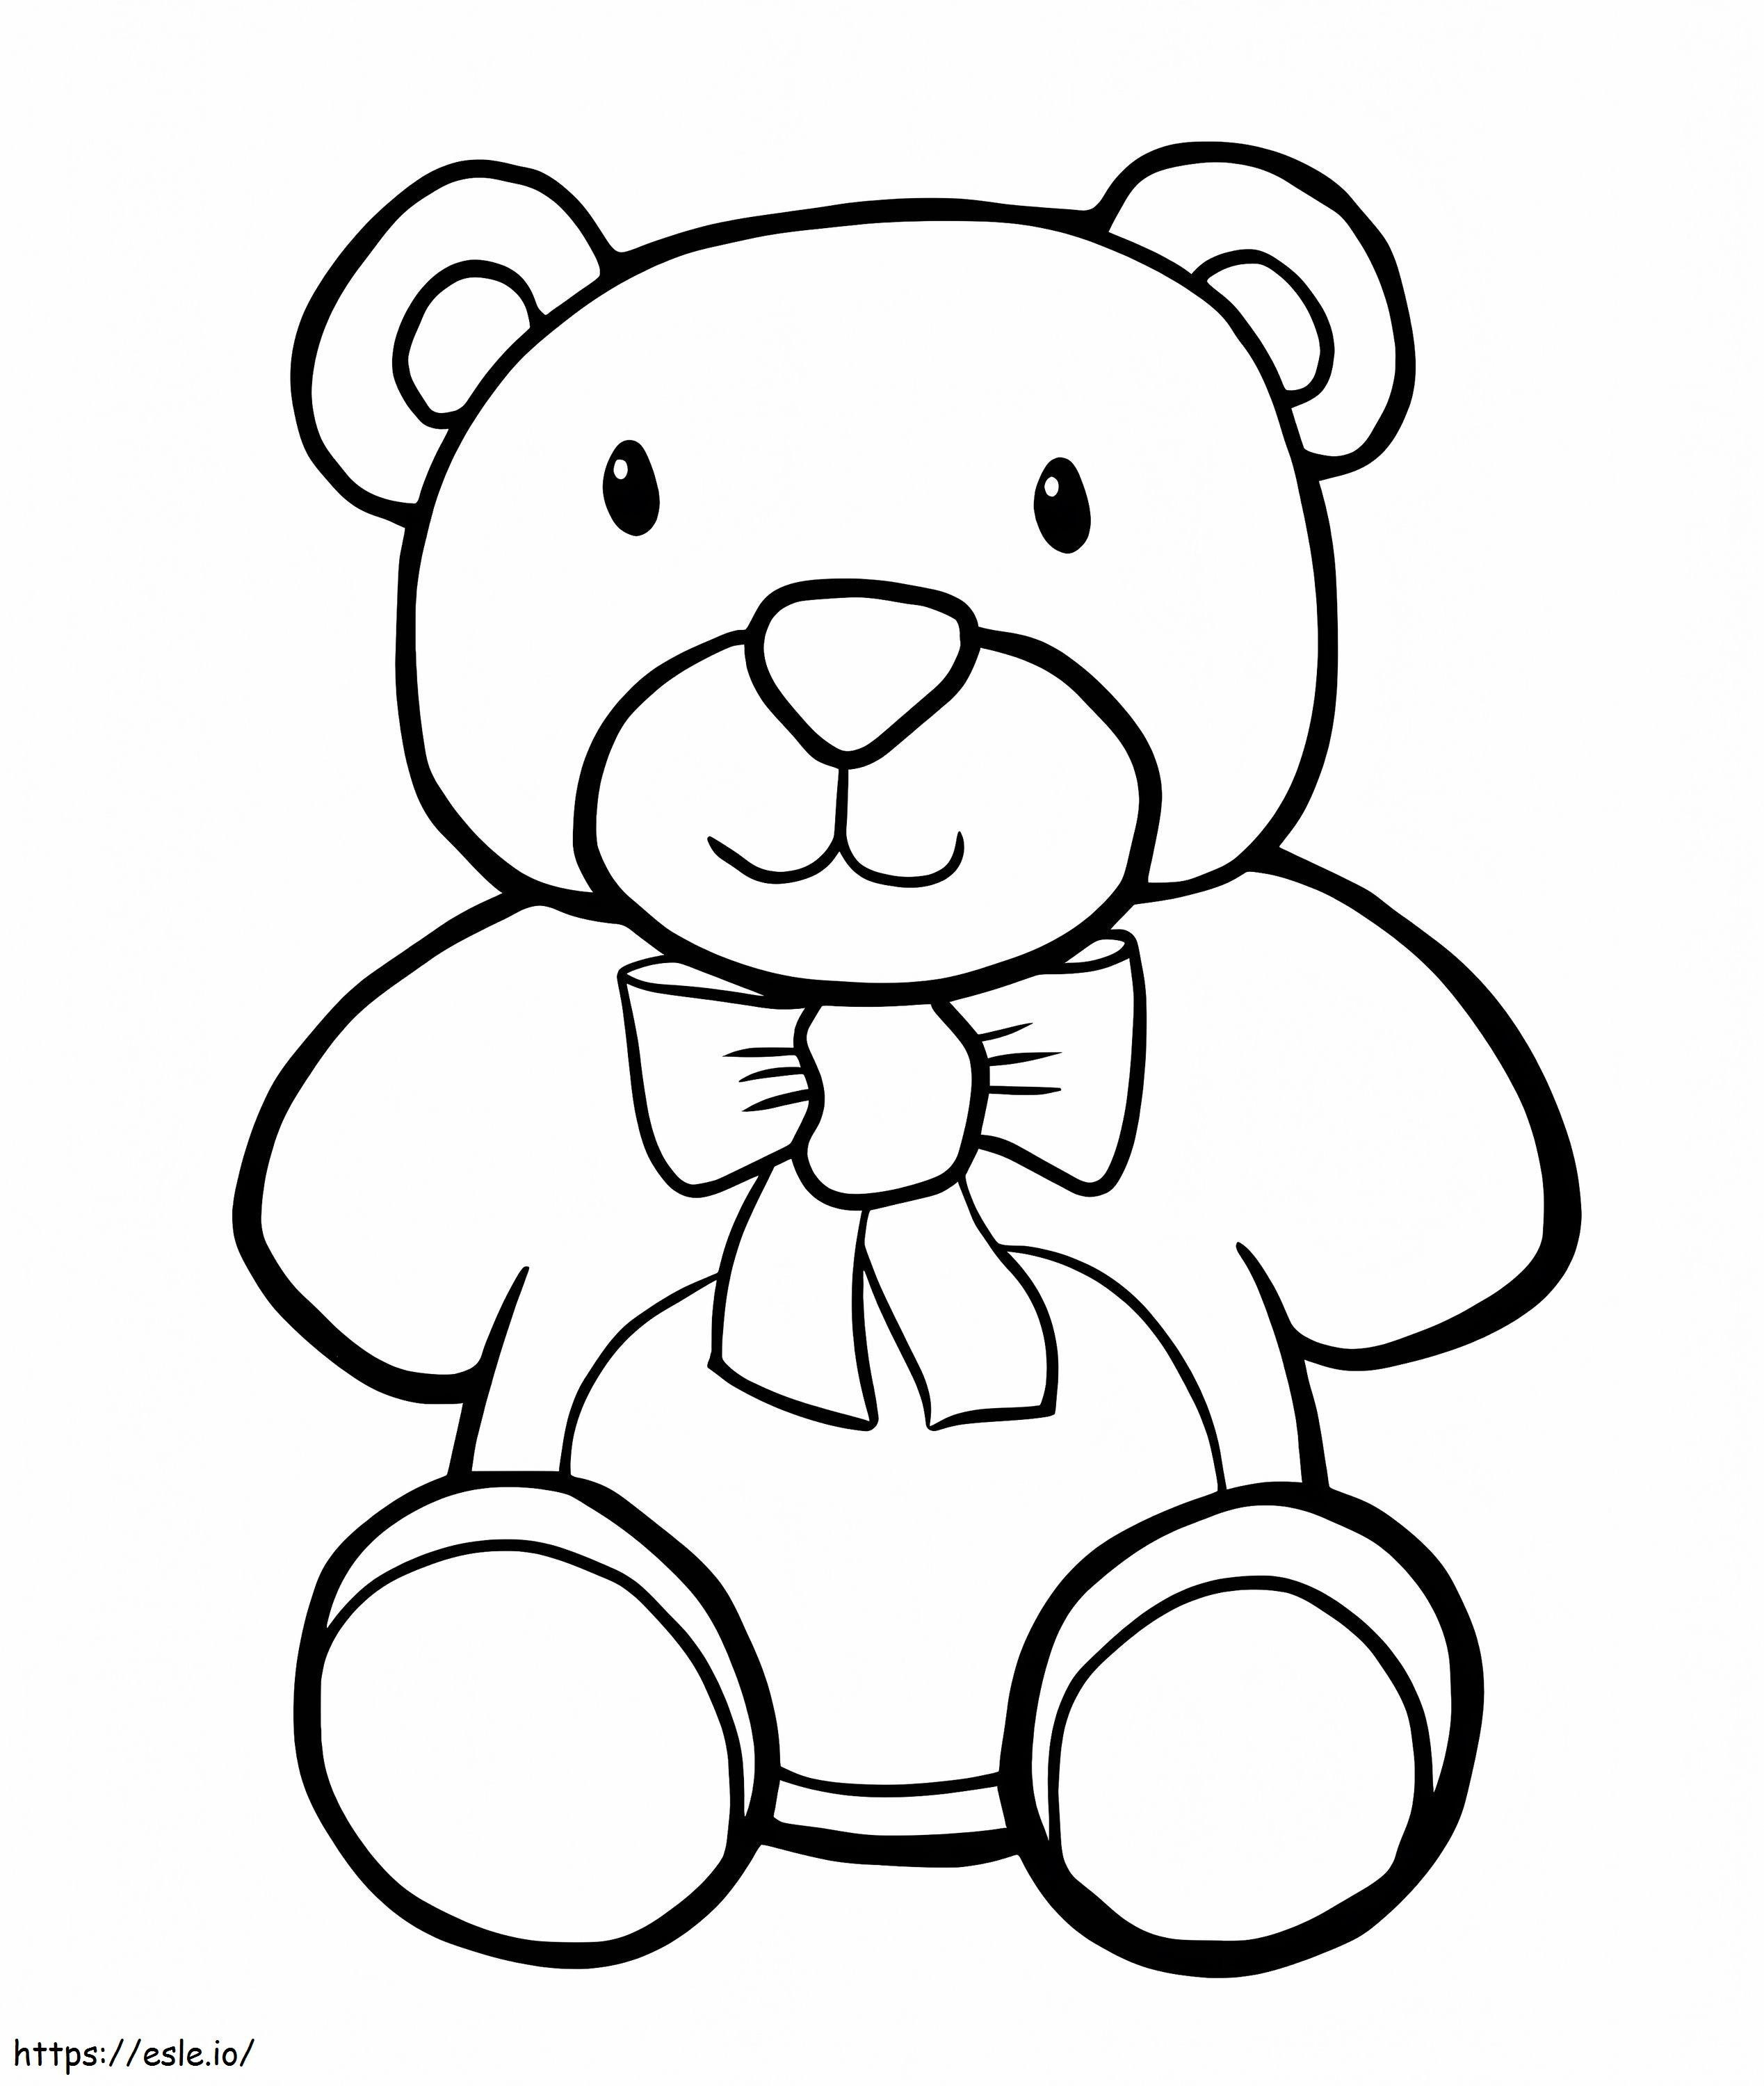 Boneka Beruang Sederhana Gambar Mewarnai